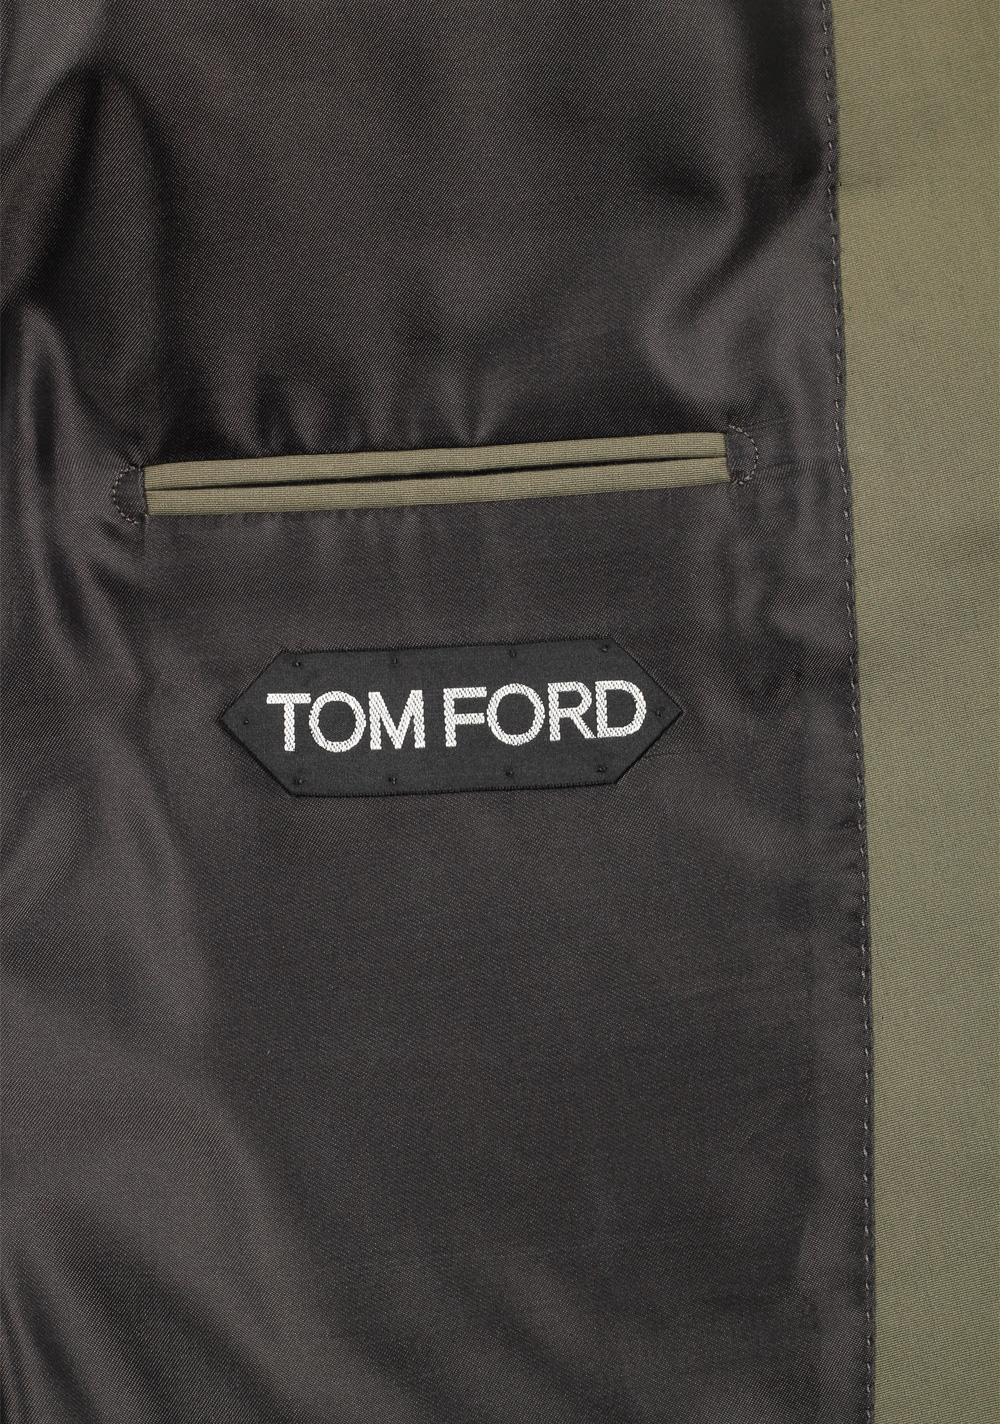 TOM FORD O’Connor Grayish Beige Sport Coat Size 54 / 44R U.S. Fit Y | Costume Limité